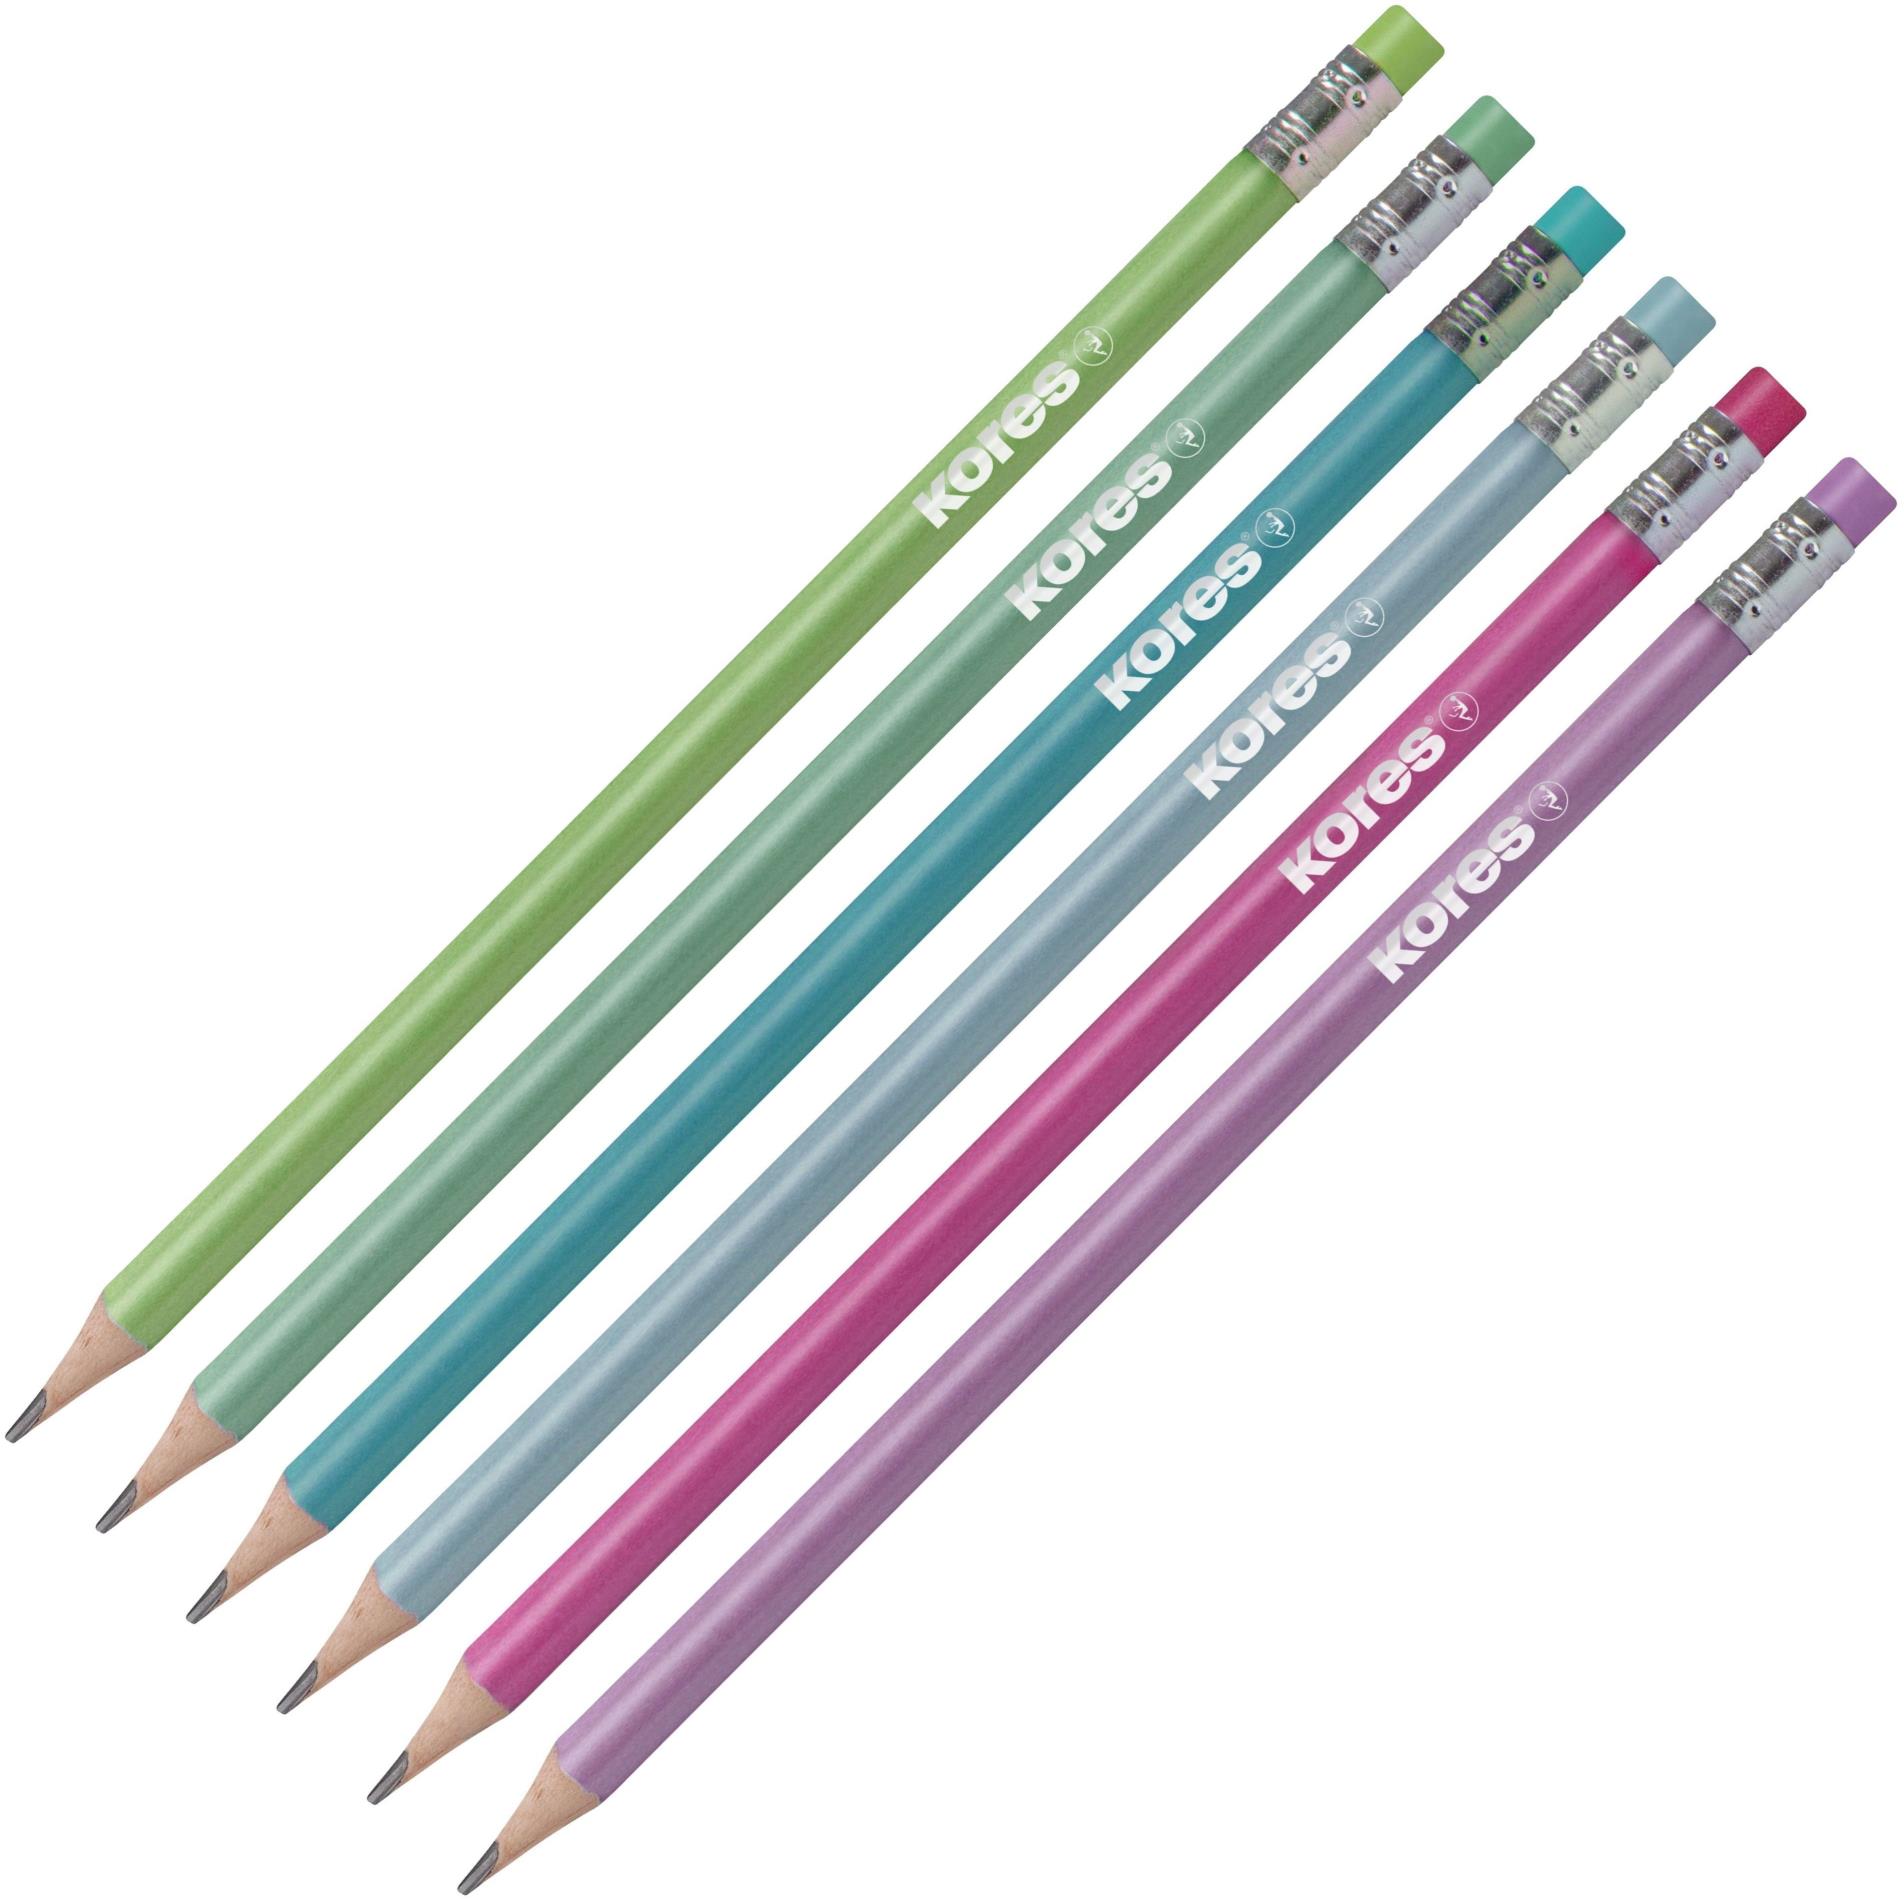 Trojhranná tužka Style s barevnou pryží Kores HB - 6 barev